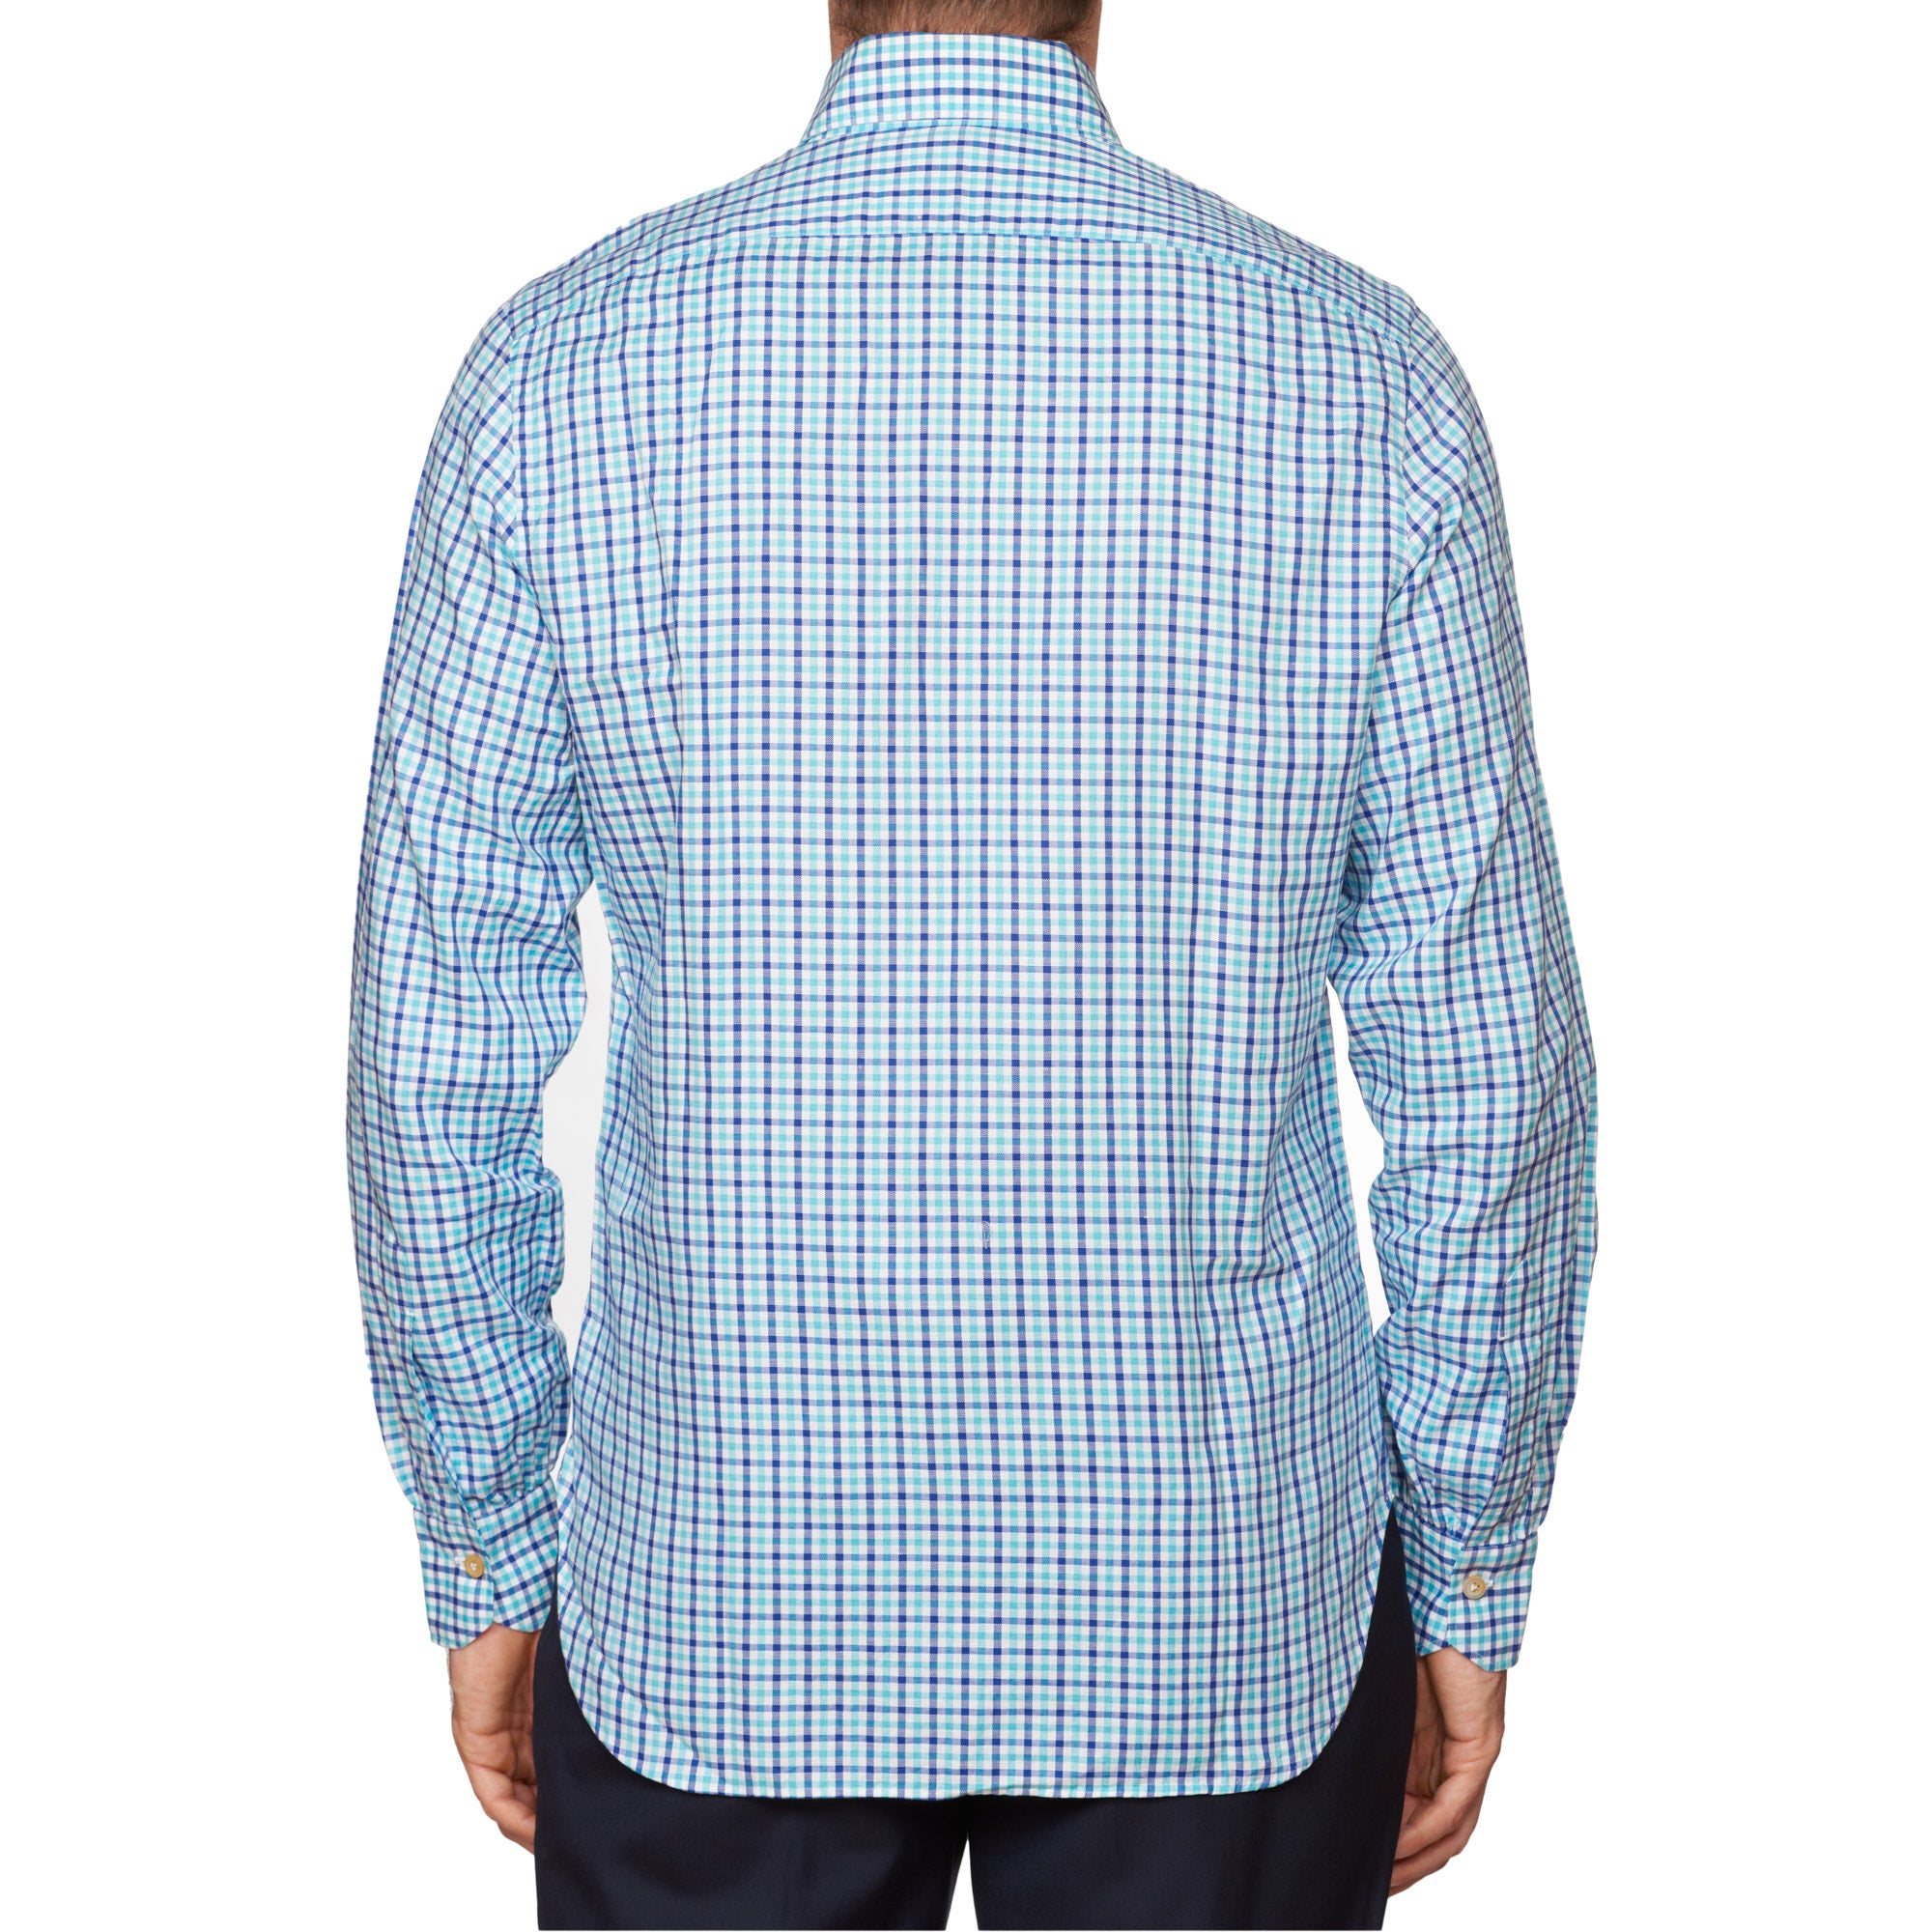 KITON Napoli Handmade Gingham Checked Cotton Button-Down Dress Shirt EU 39 NEW US 15.5 KITON